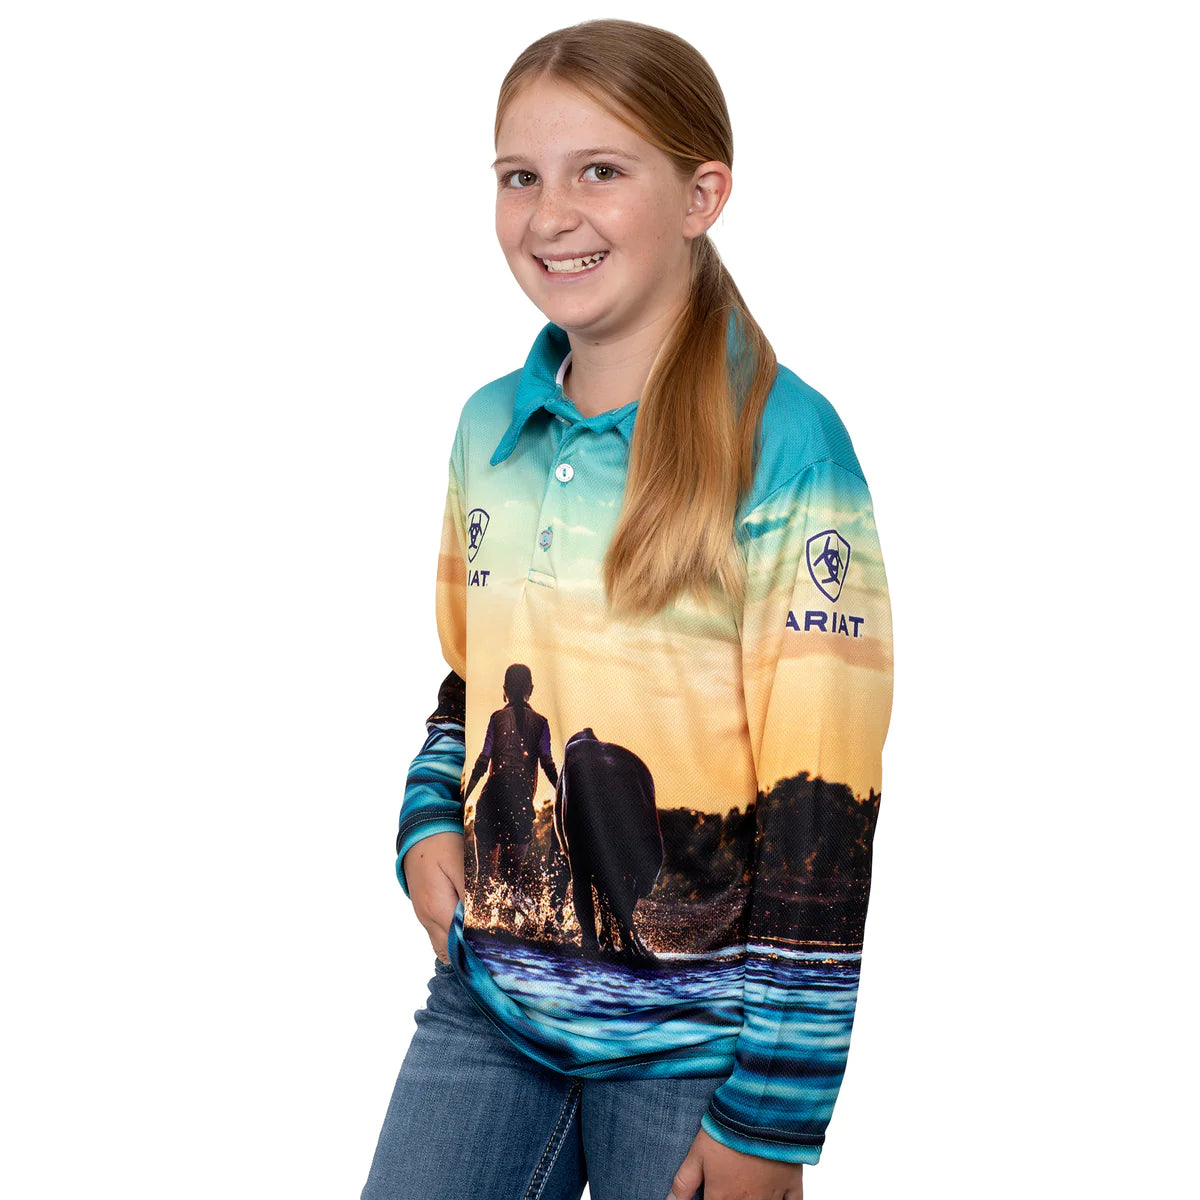 Ariat Girls Fishing Shirt - Western Horses